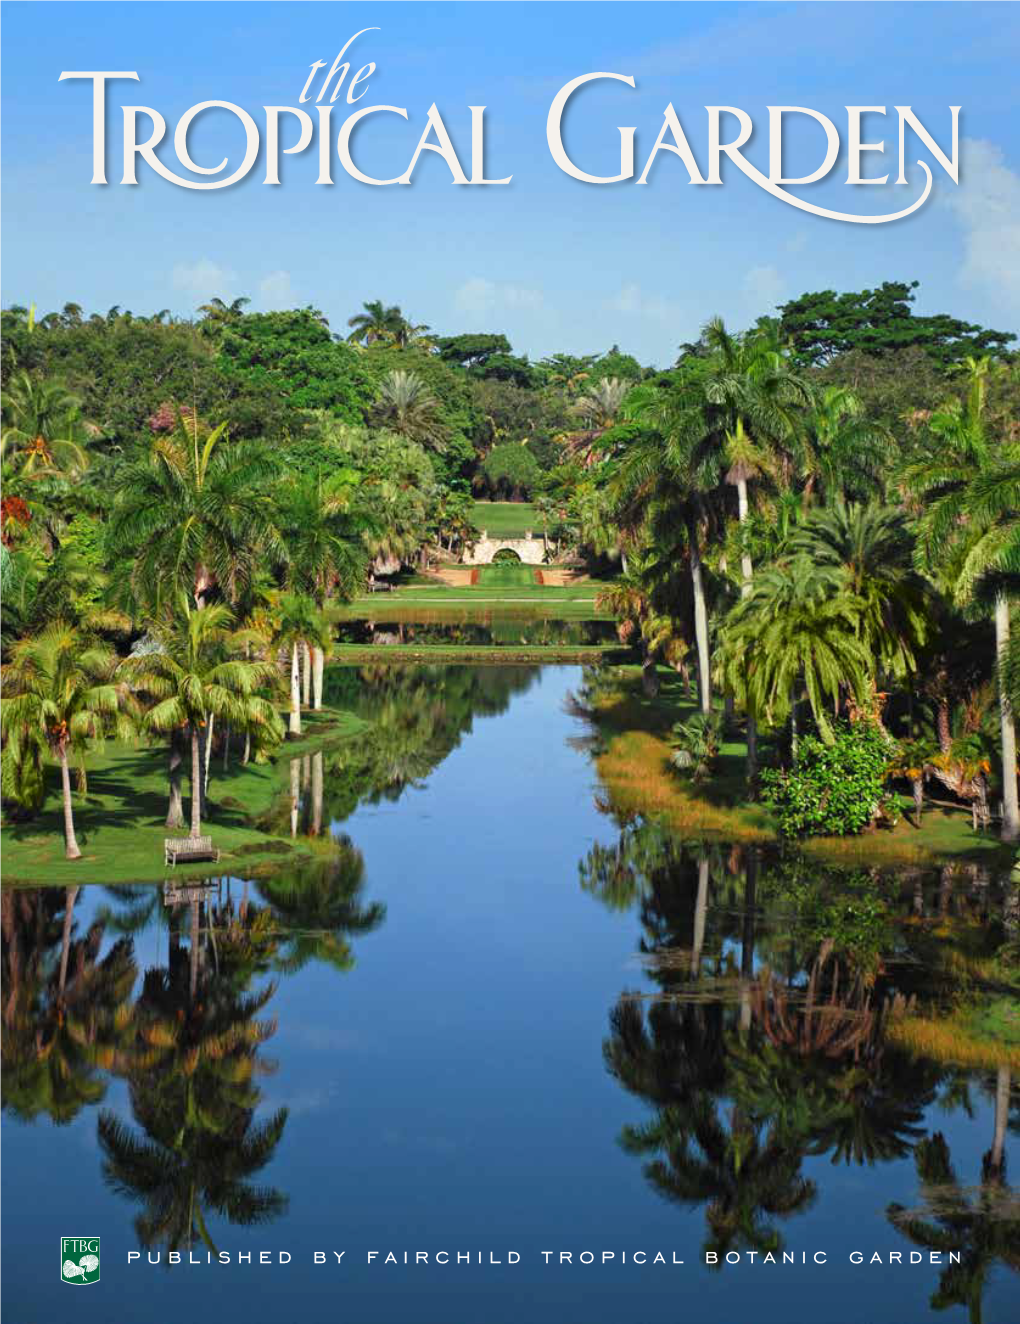 Published by Fairchild Tropical Botanic Garden Hurricane Irma